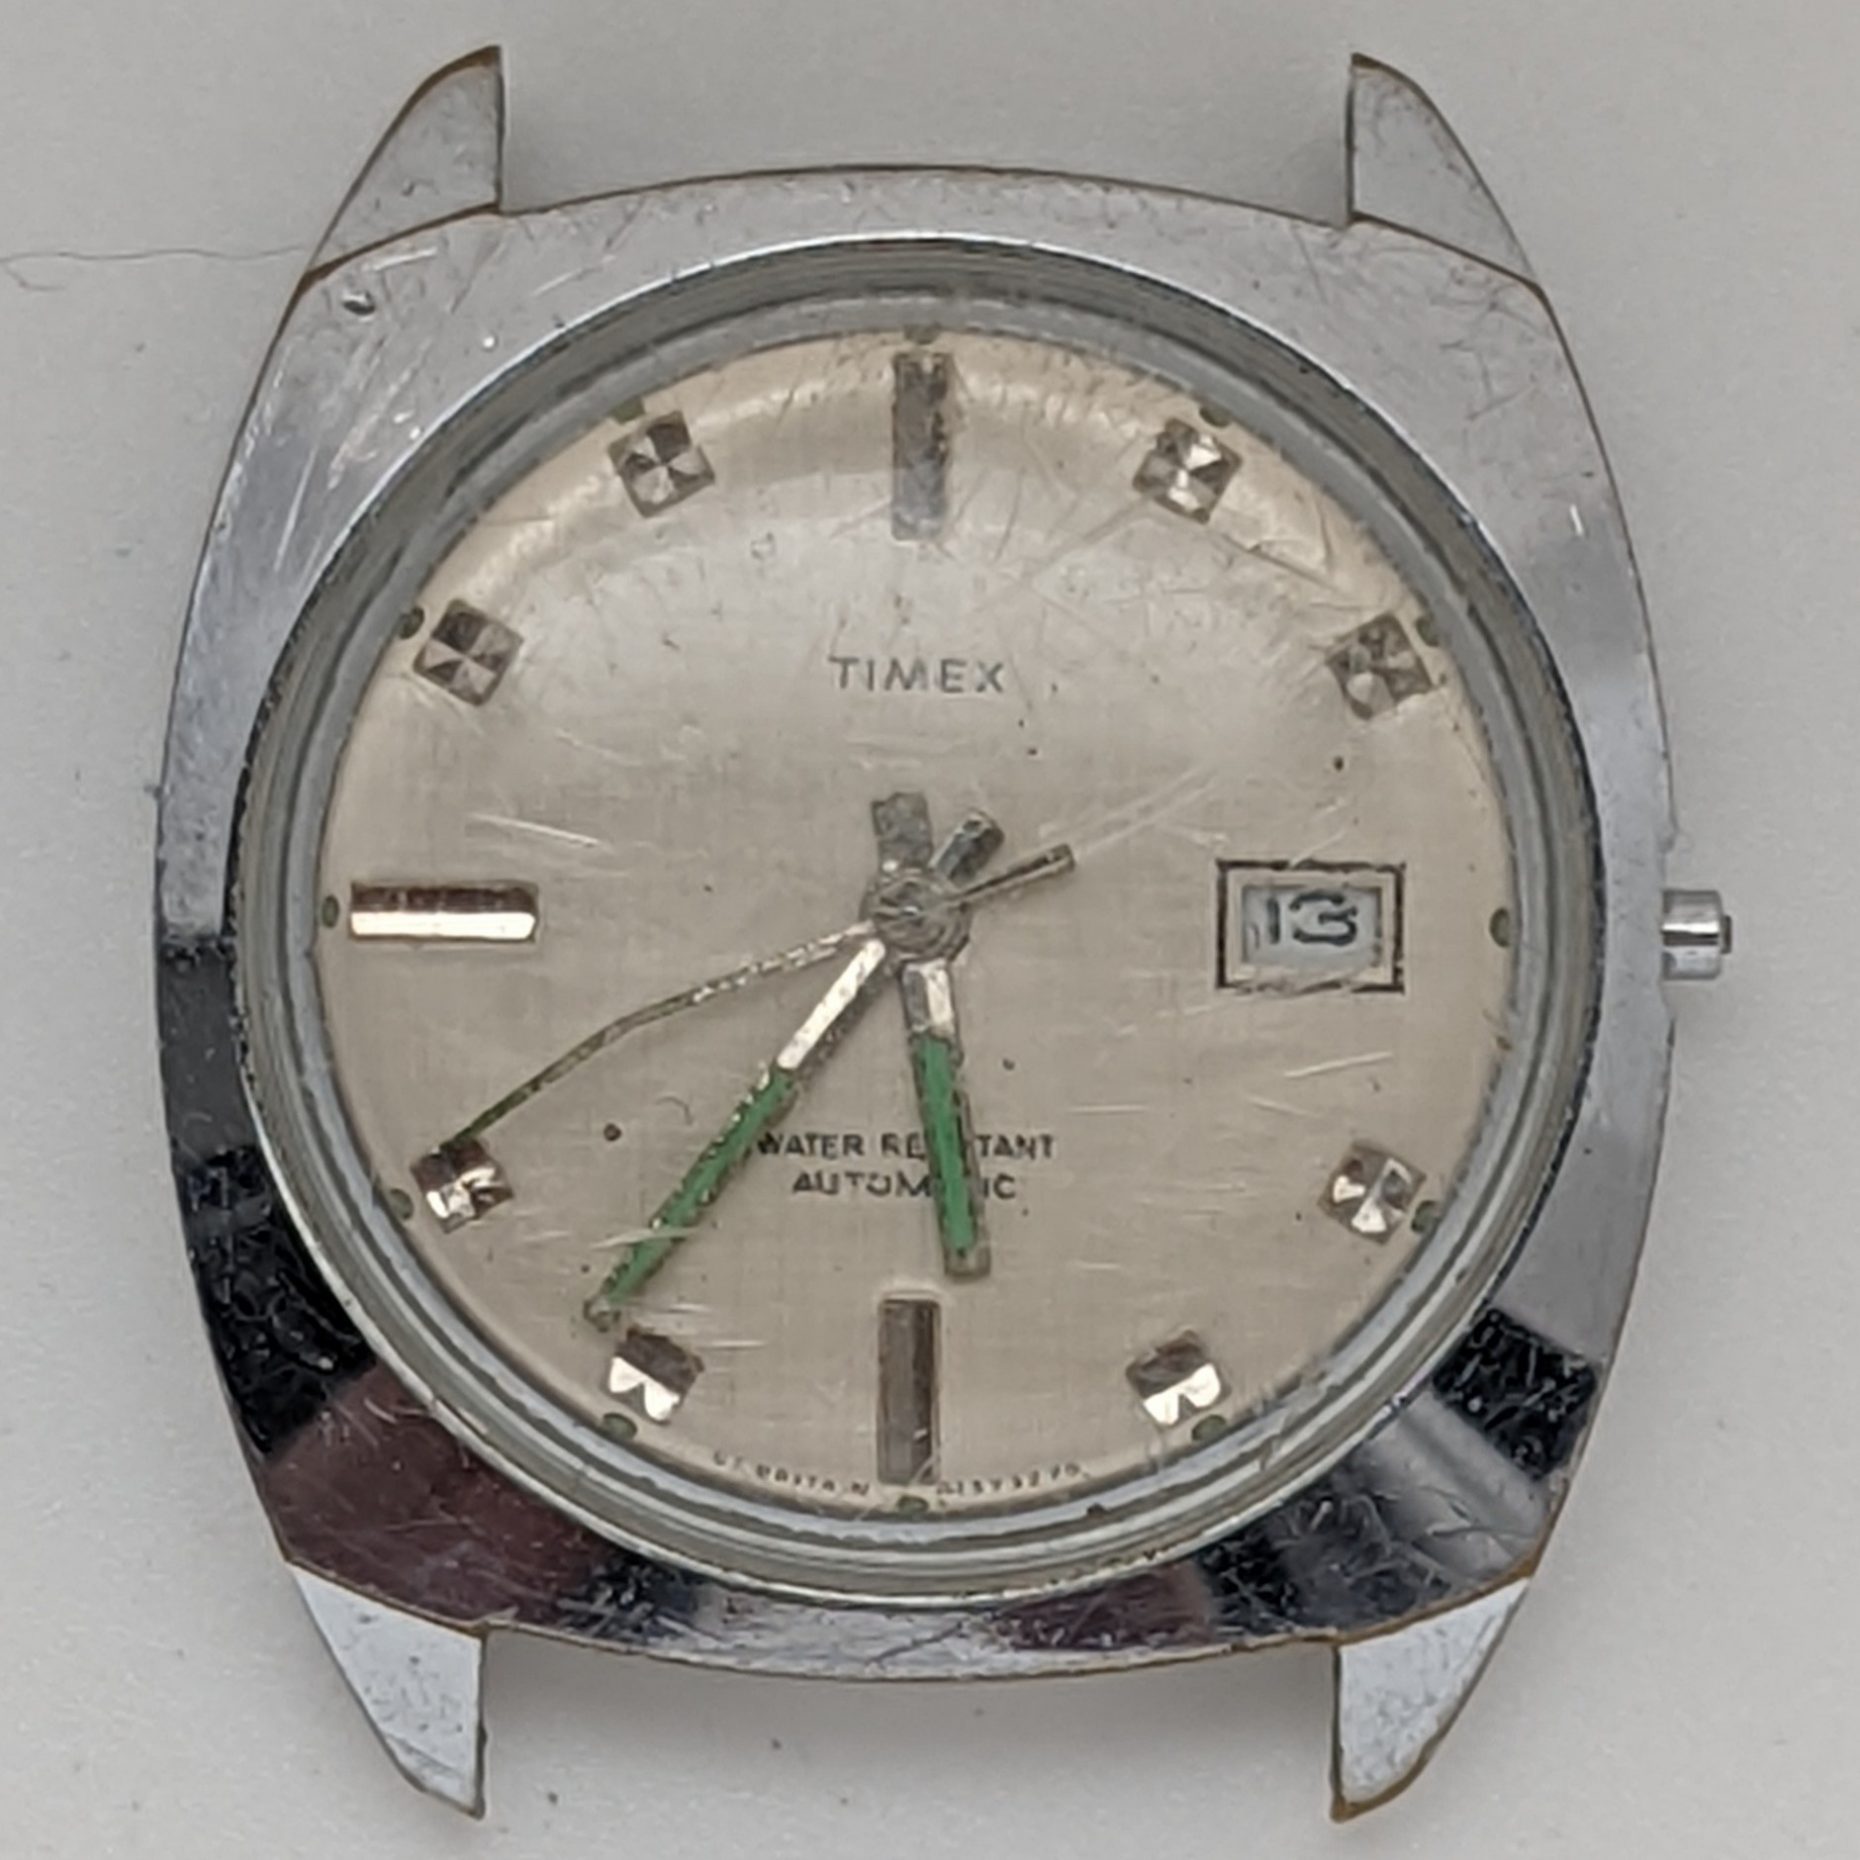 Timex Viscount 4137 3270 [1970]